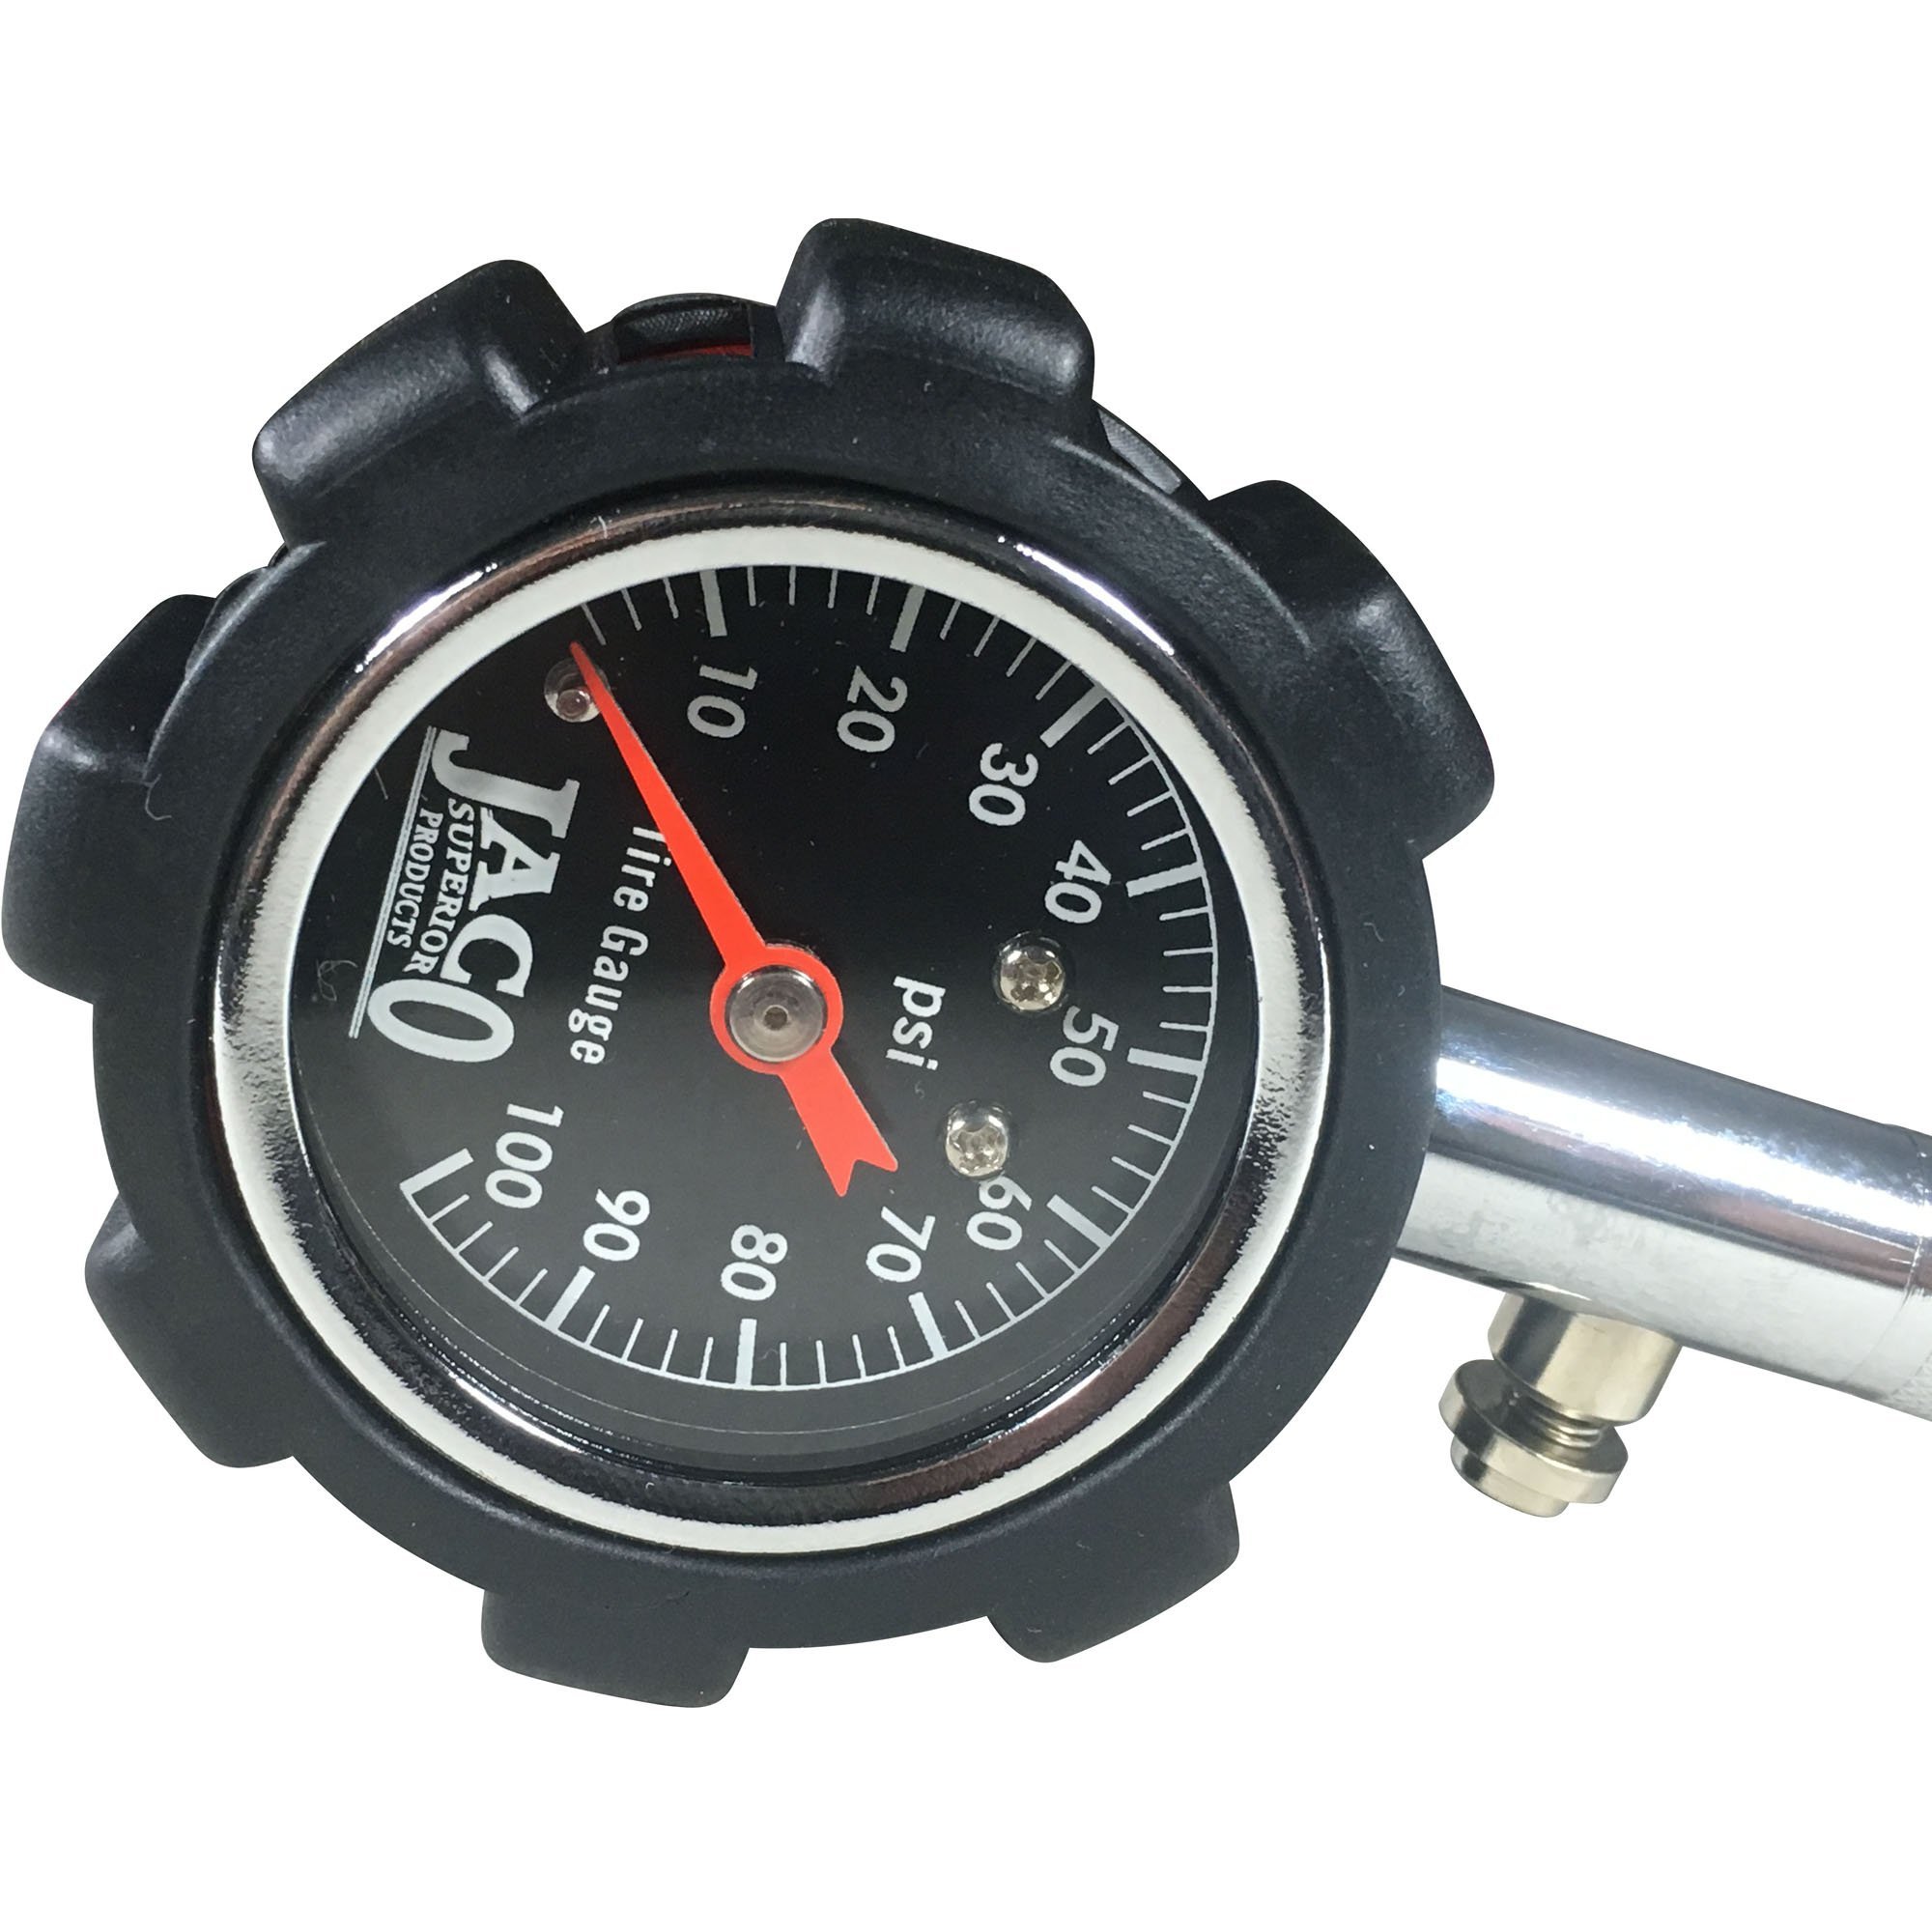 jaco bikepro presta tire pressure gauge 160 psi